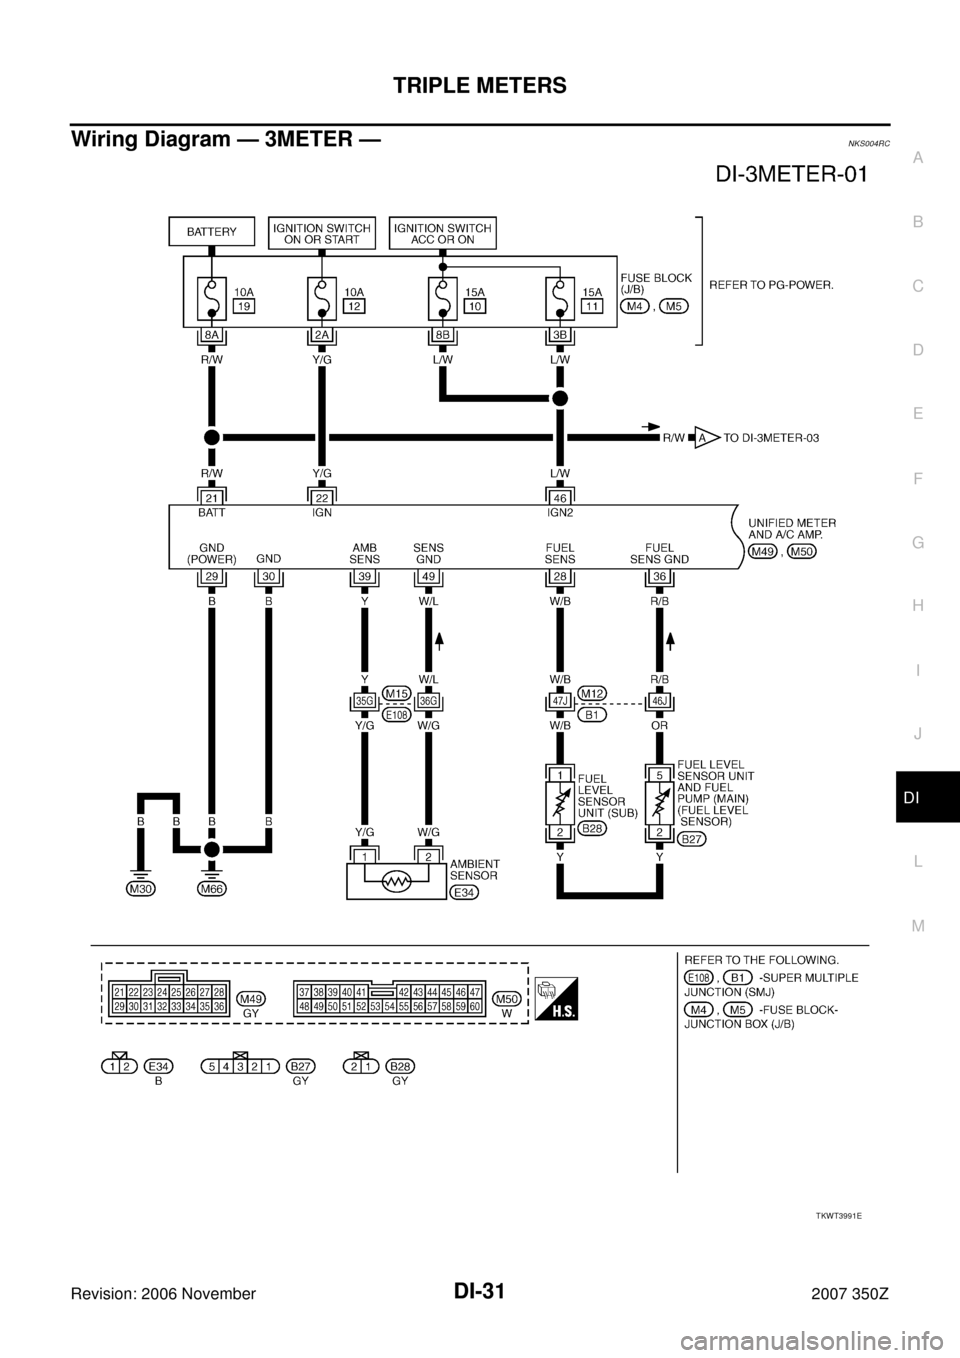 NISSAN 350Z 2007 Z33 Driver Information Manual TRIPLE METERS
DI-31
C
D
E
F
G
H
I
J
L
MA
B
DI
Revision: 2006 November2007 350Z
Wiring Diagram — 3METER — NKS004RC
TKWT3991E 